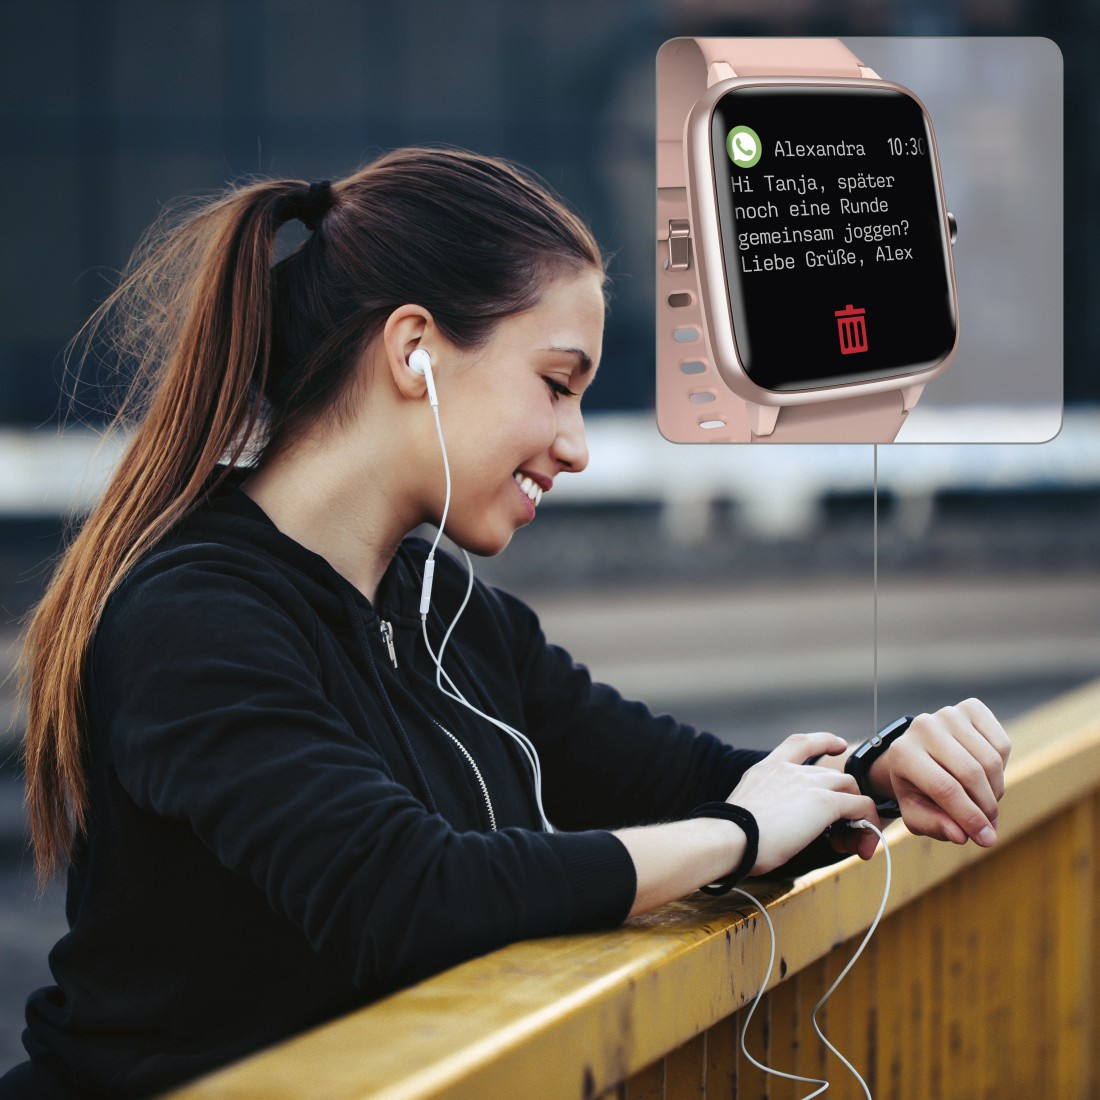 HAMA Fit Watch (Länge Edelstahl 255 mm Smartwatch 5910 insgesamt), Rosegold Kunststoff